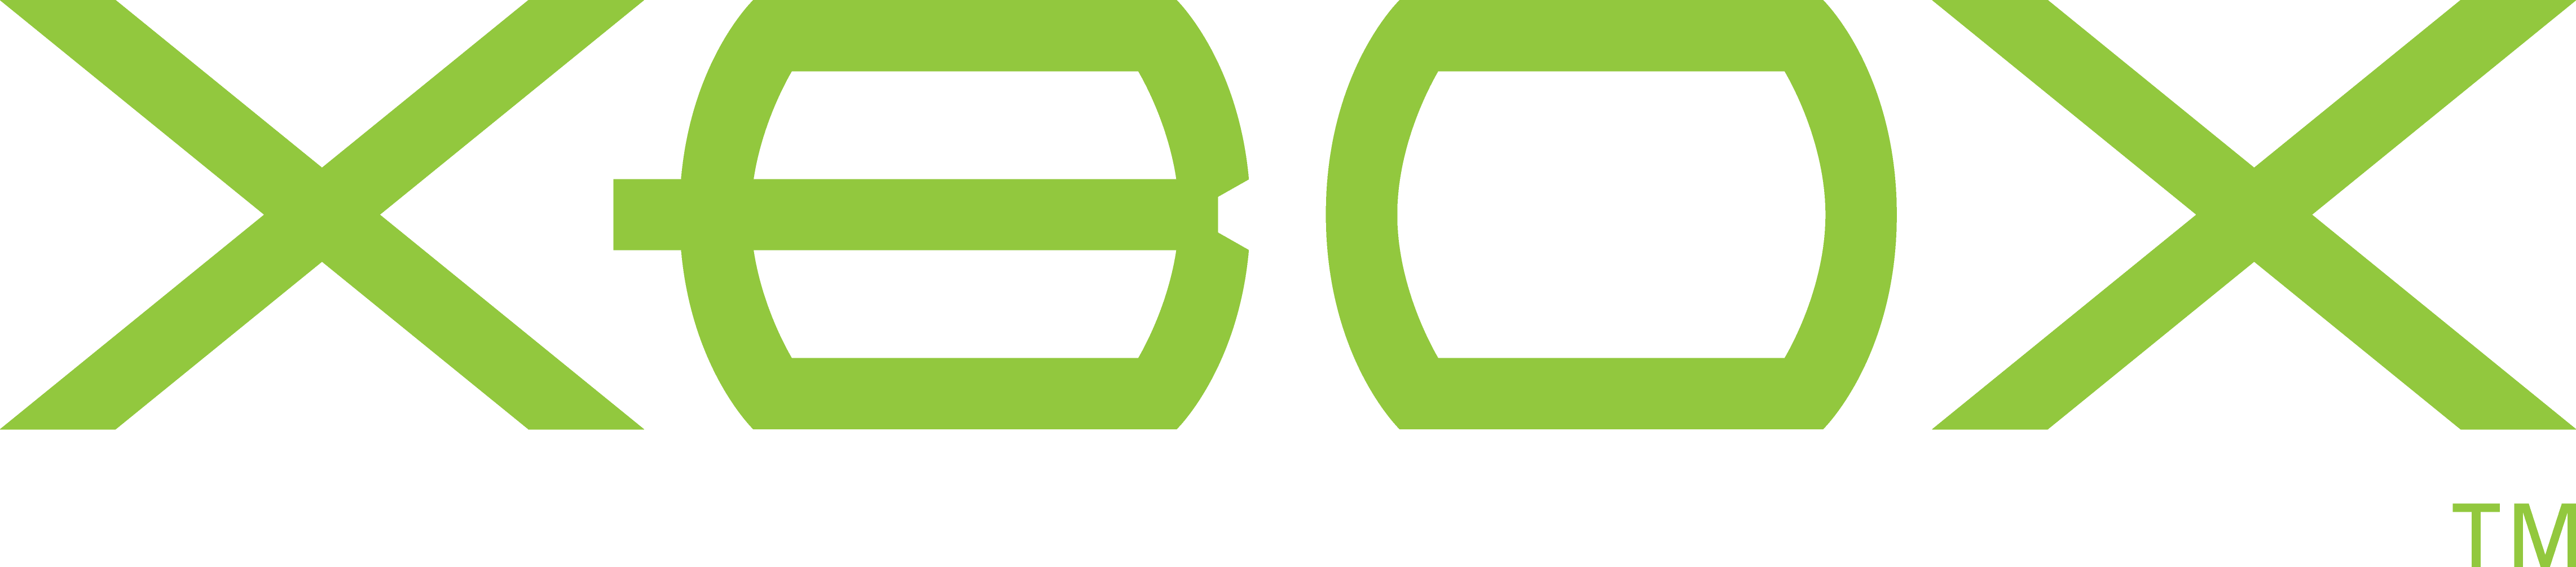 Xbox Logo PNG Transparent Xbox Logo PNG Images PlusPNG